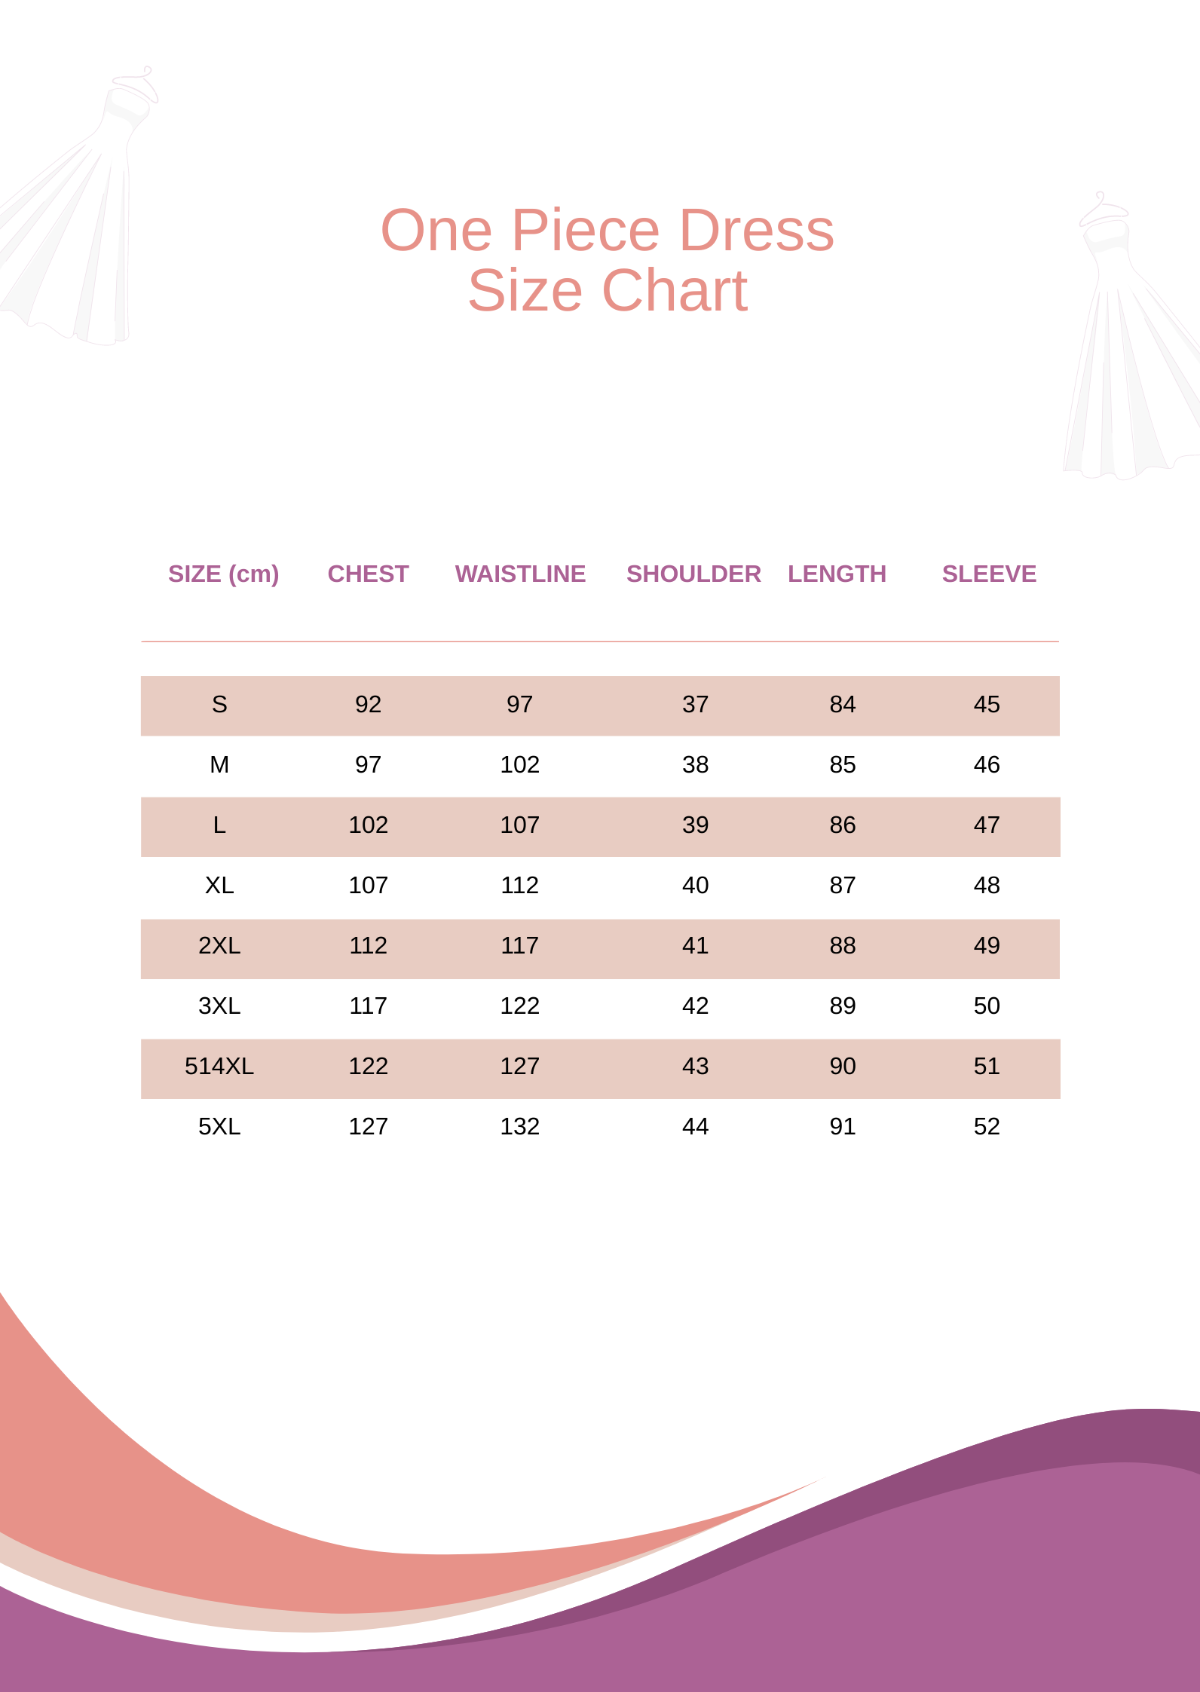 One Piece Dress Size Chart Template